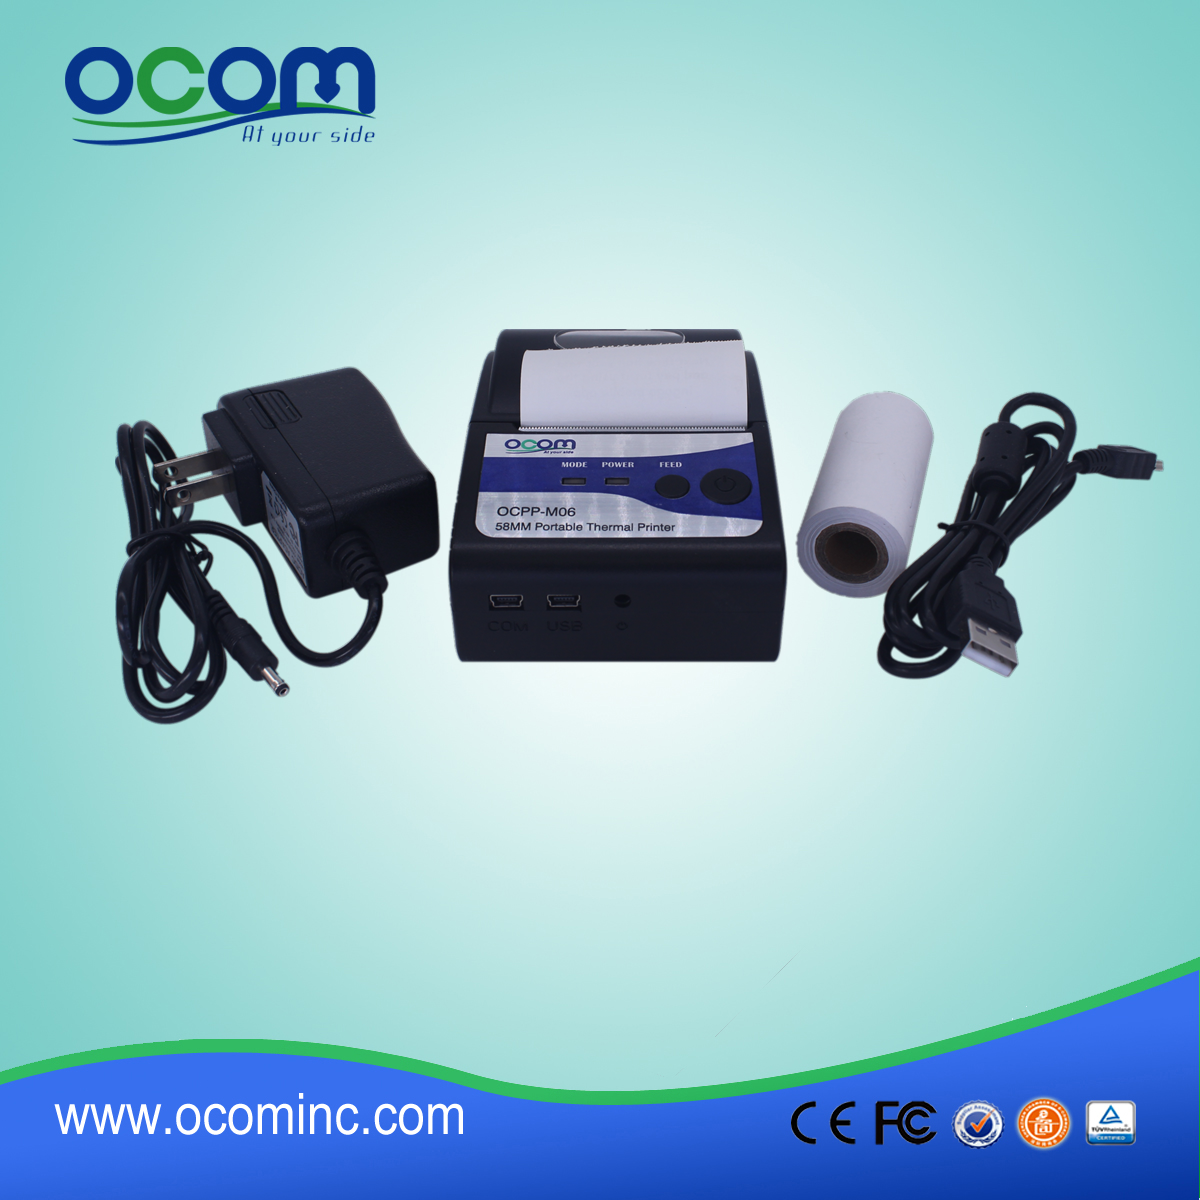 (OCPP-M06) Chiny fabryka OCOM bluetooth drukarki android, android drukarki pos